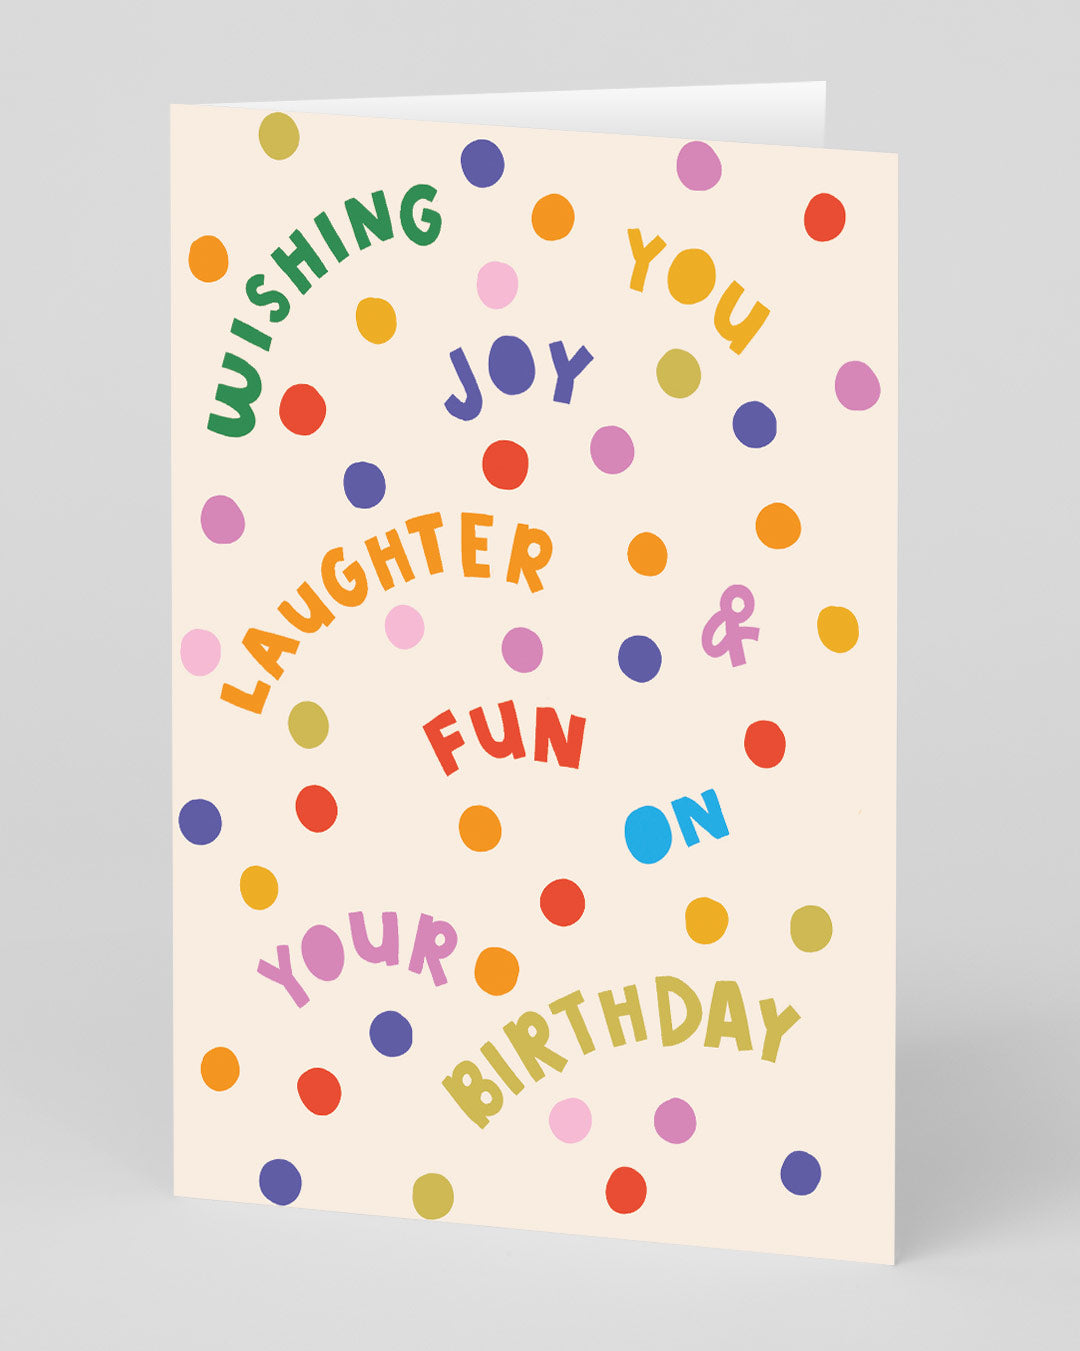 Joy Laughter Fun Birthday Card